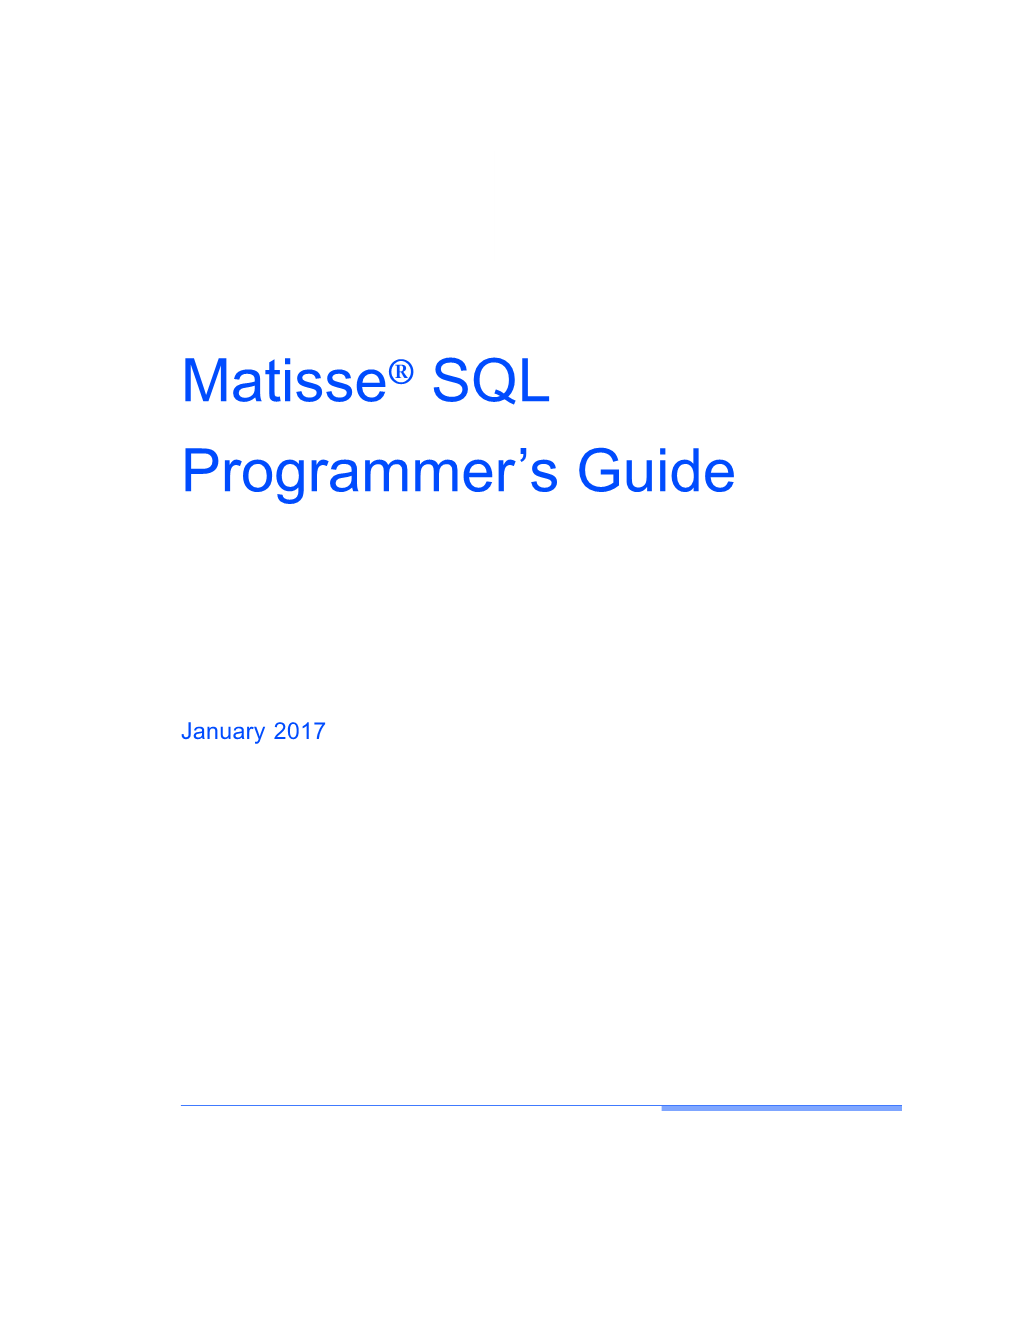 Matisse SQL Programmer's Guide